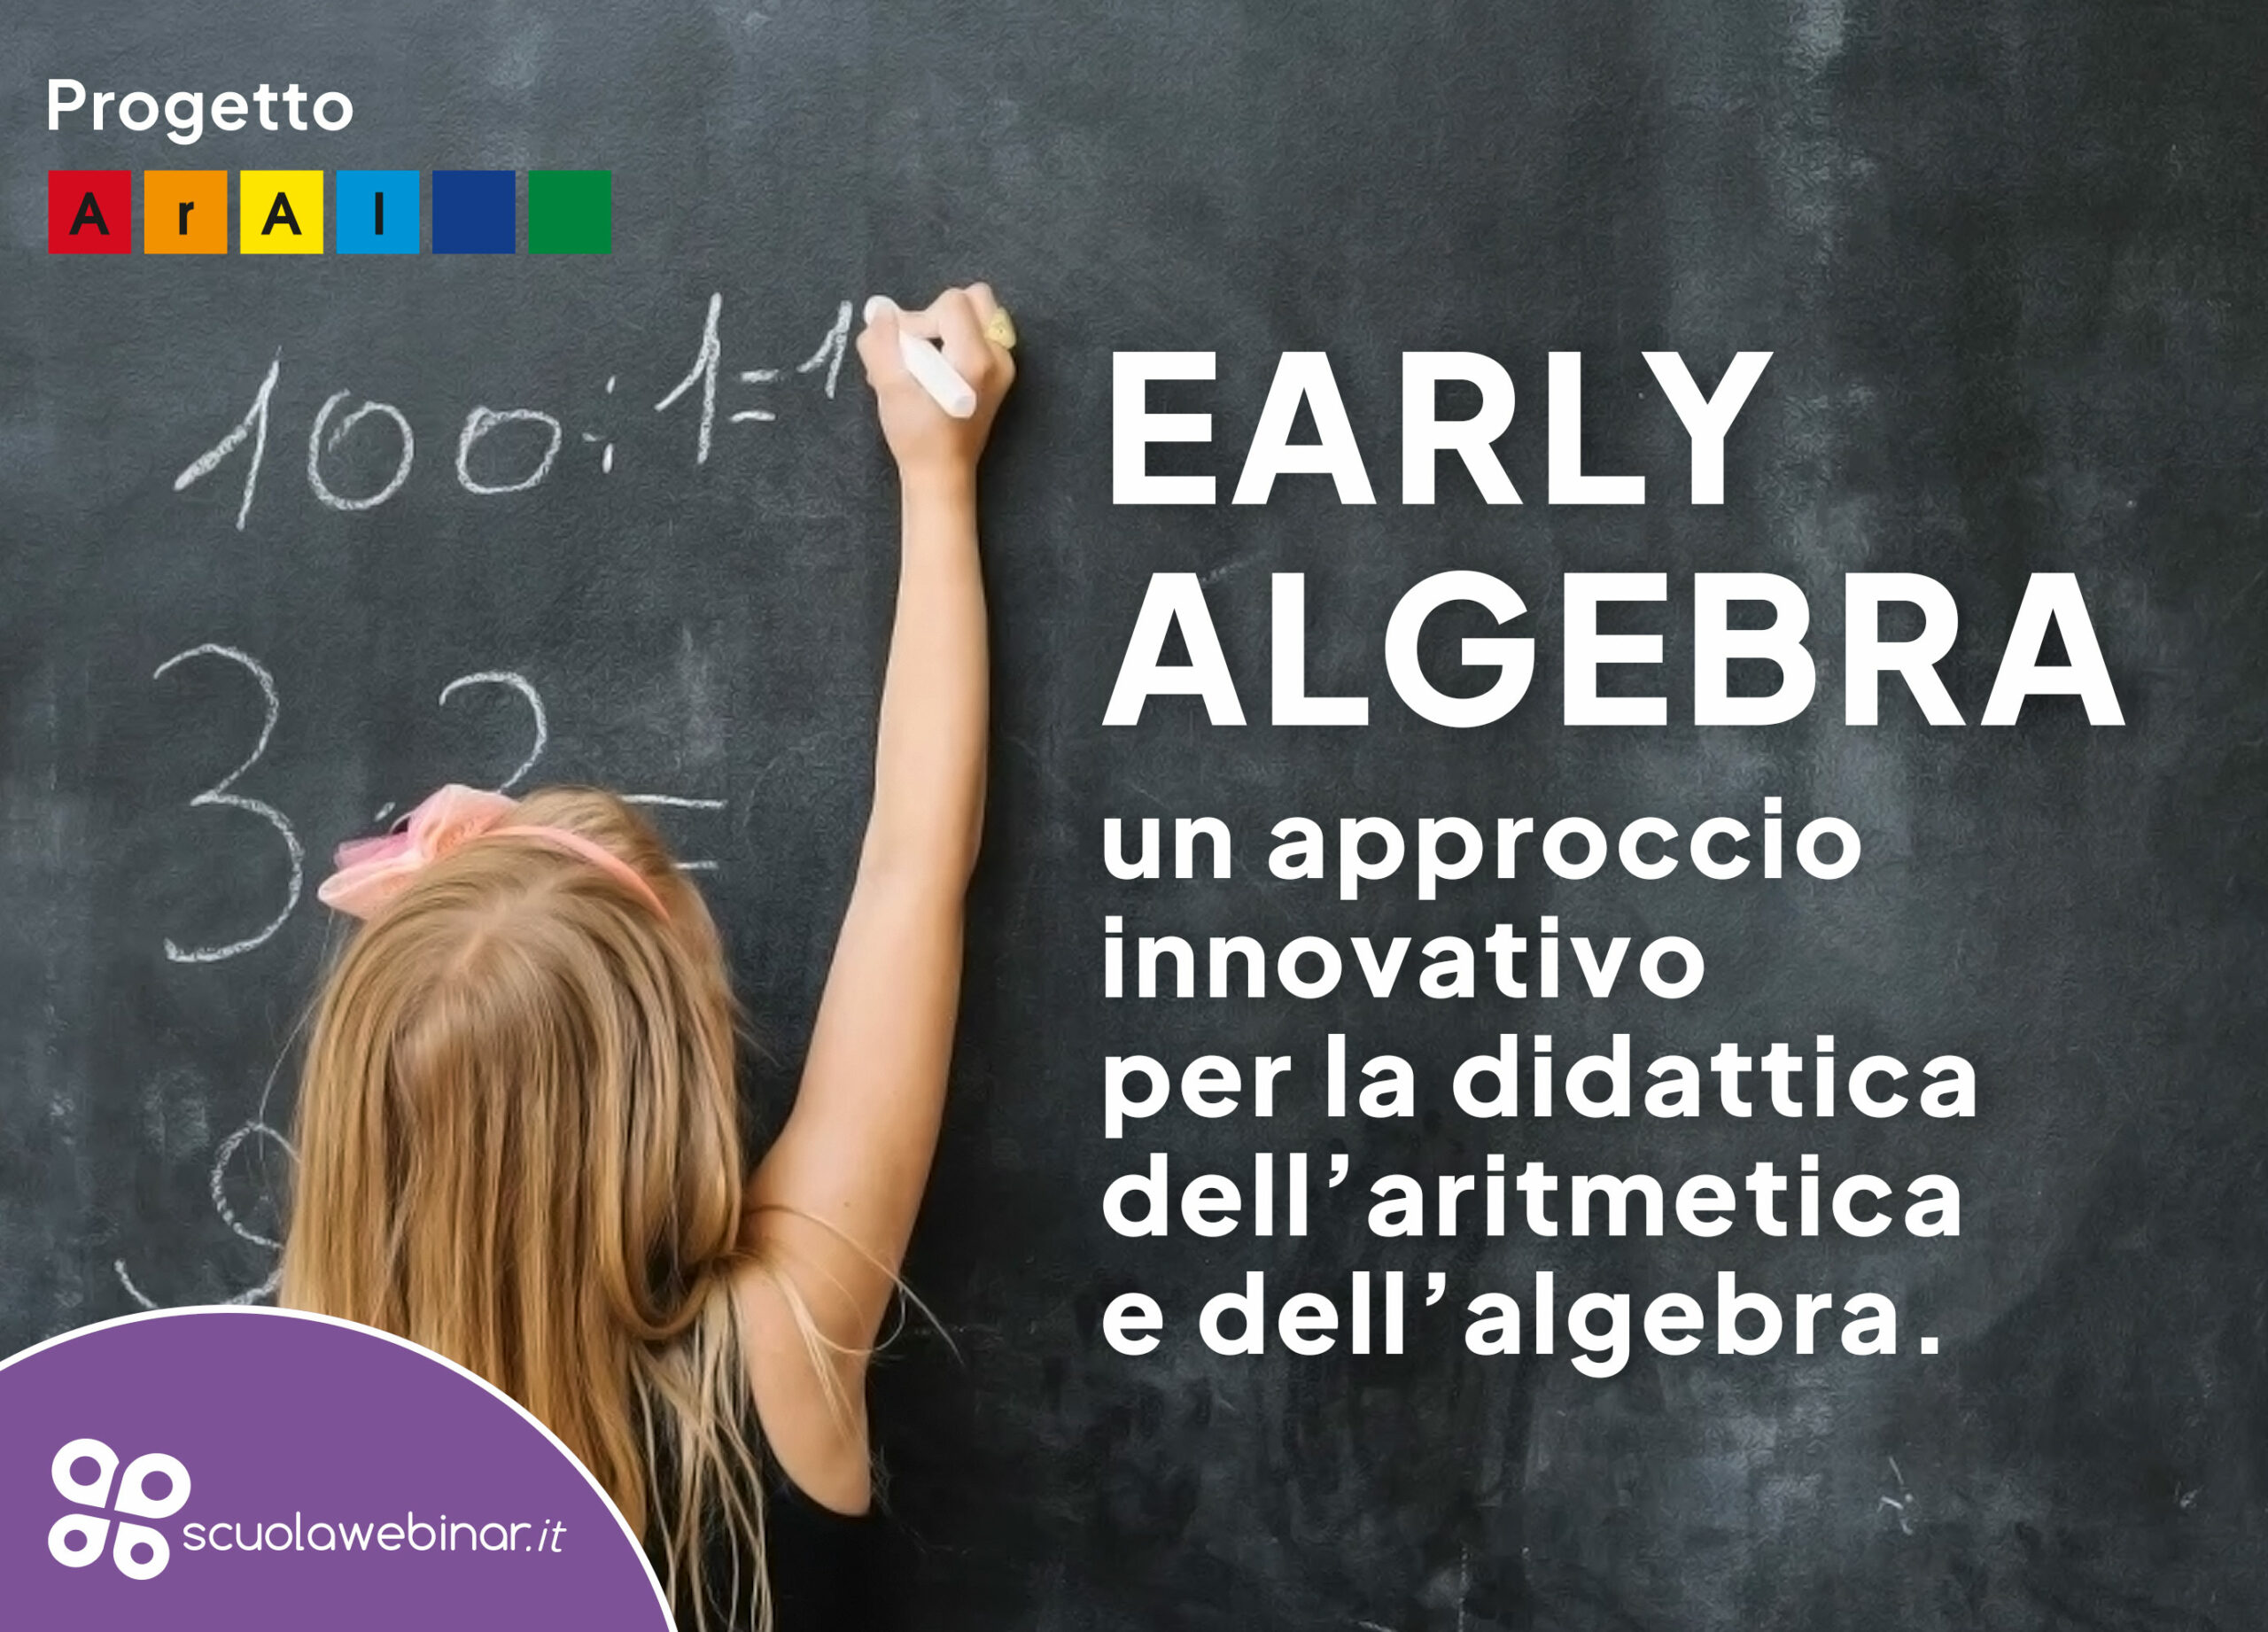 Progetto ArAl - Early Algebra